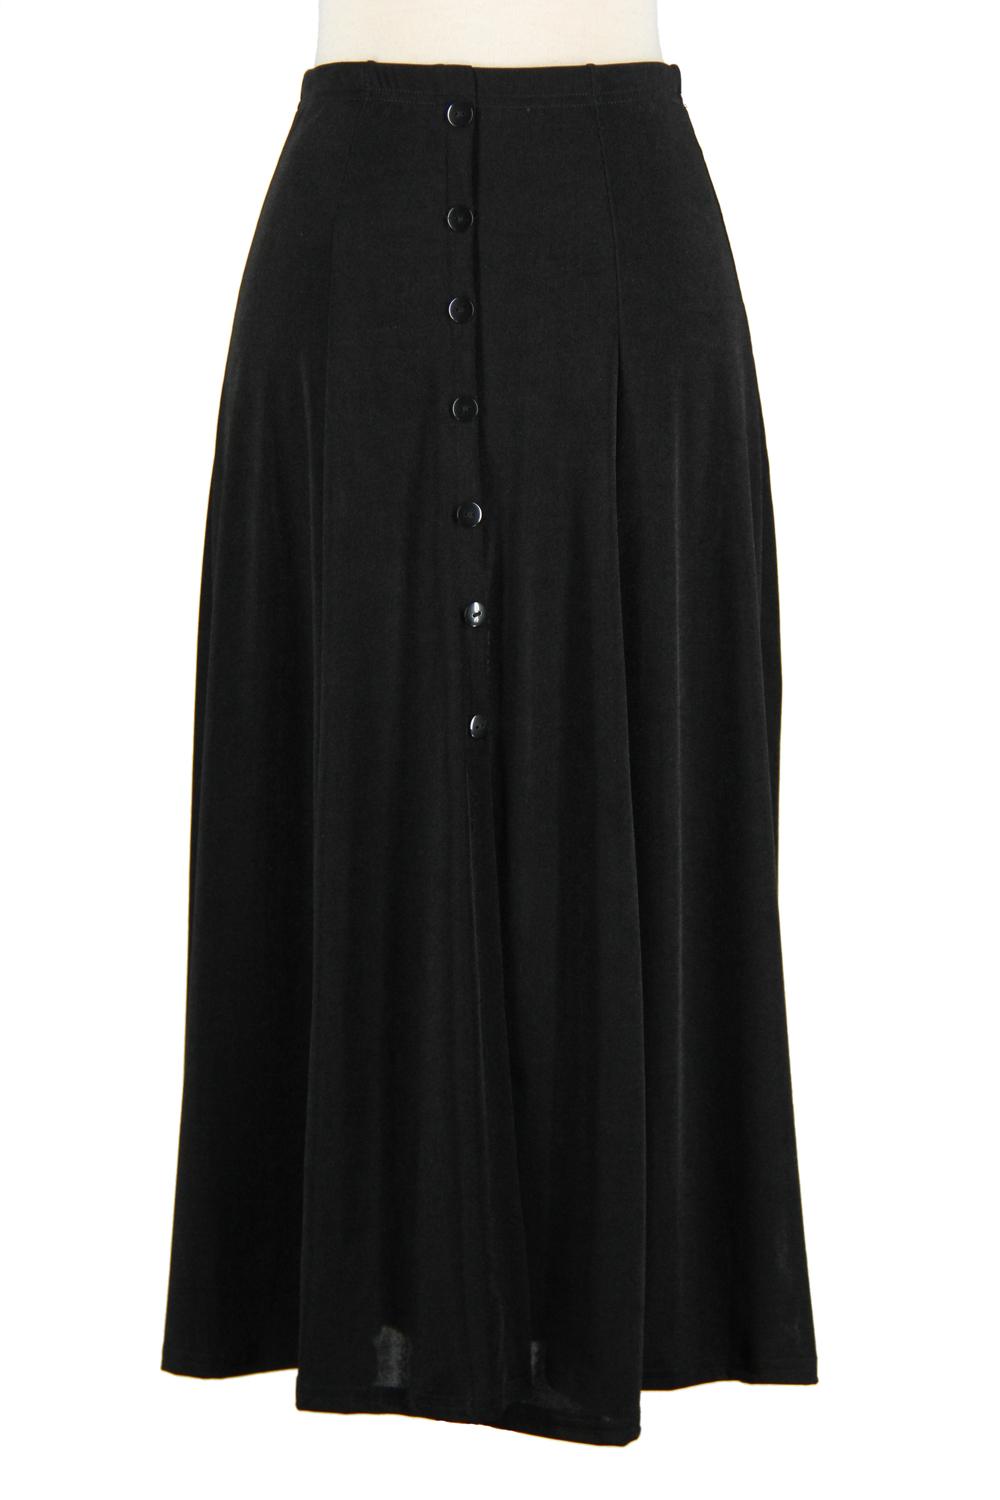 Jostar Stretchy Button Skirt, 600BN - Jostar Online